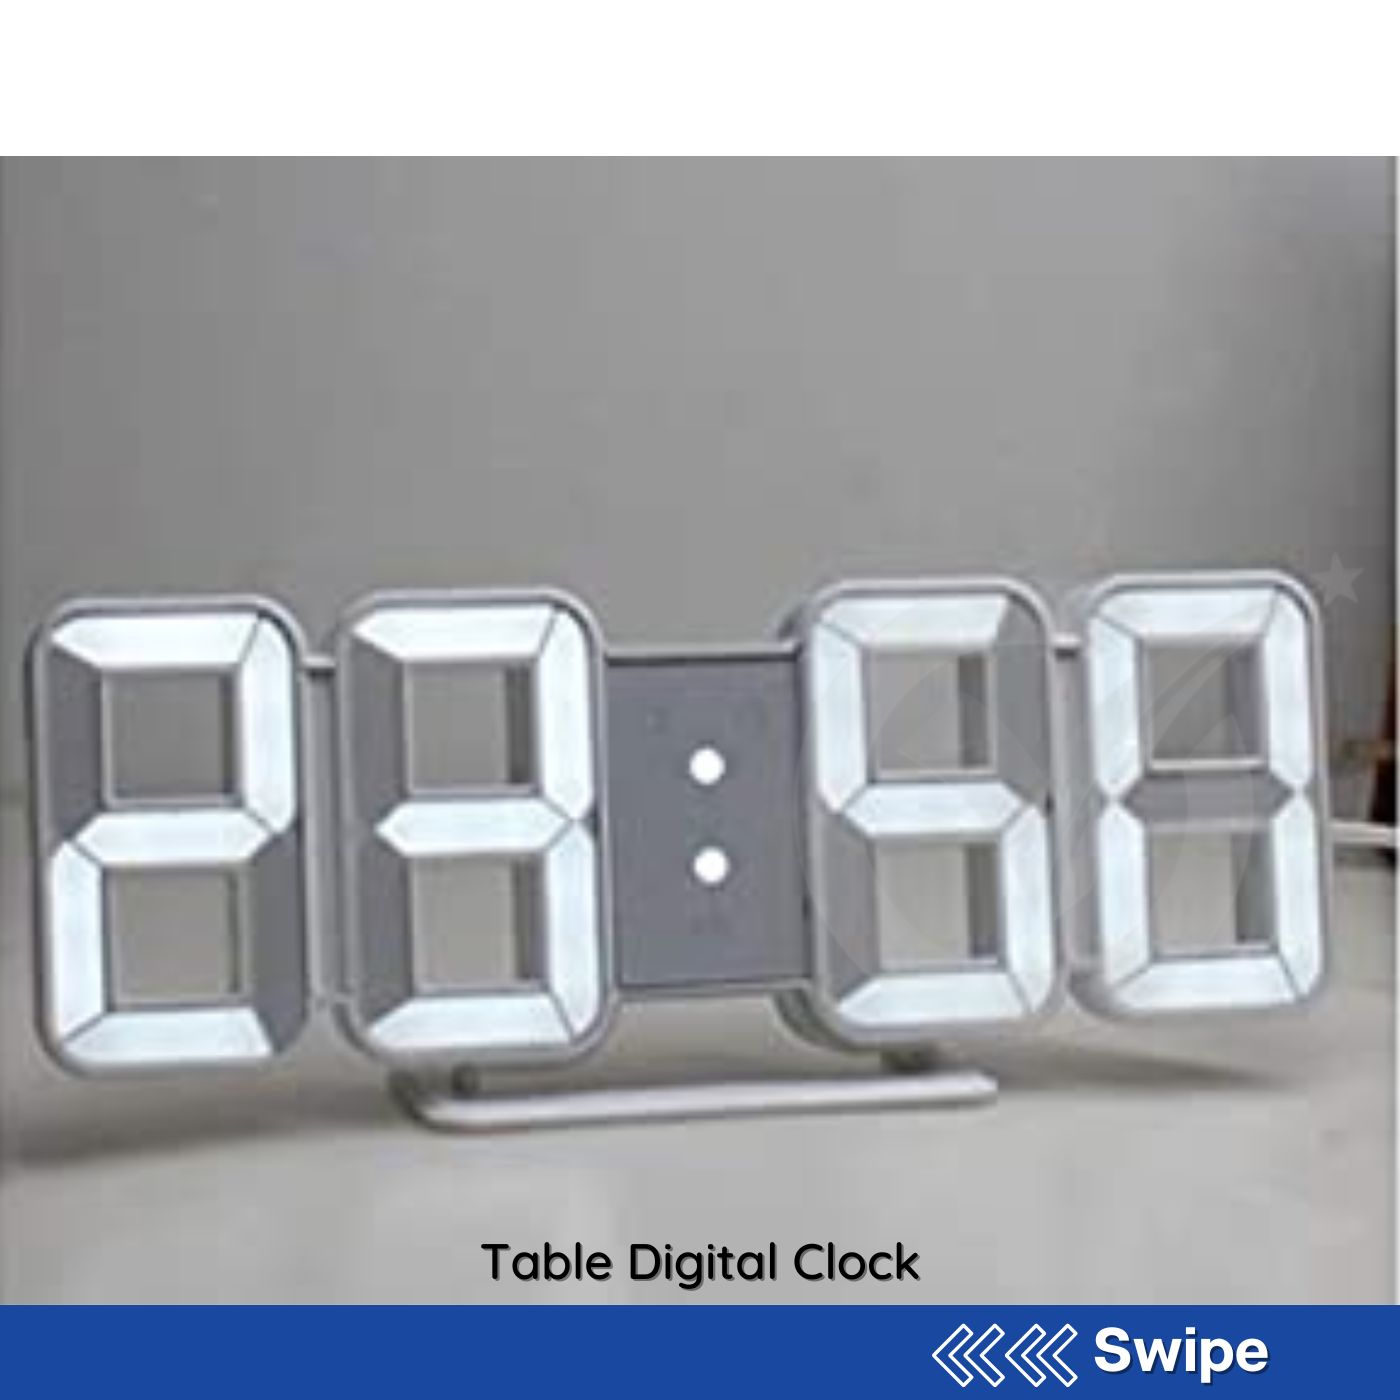 Table Digital Clock